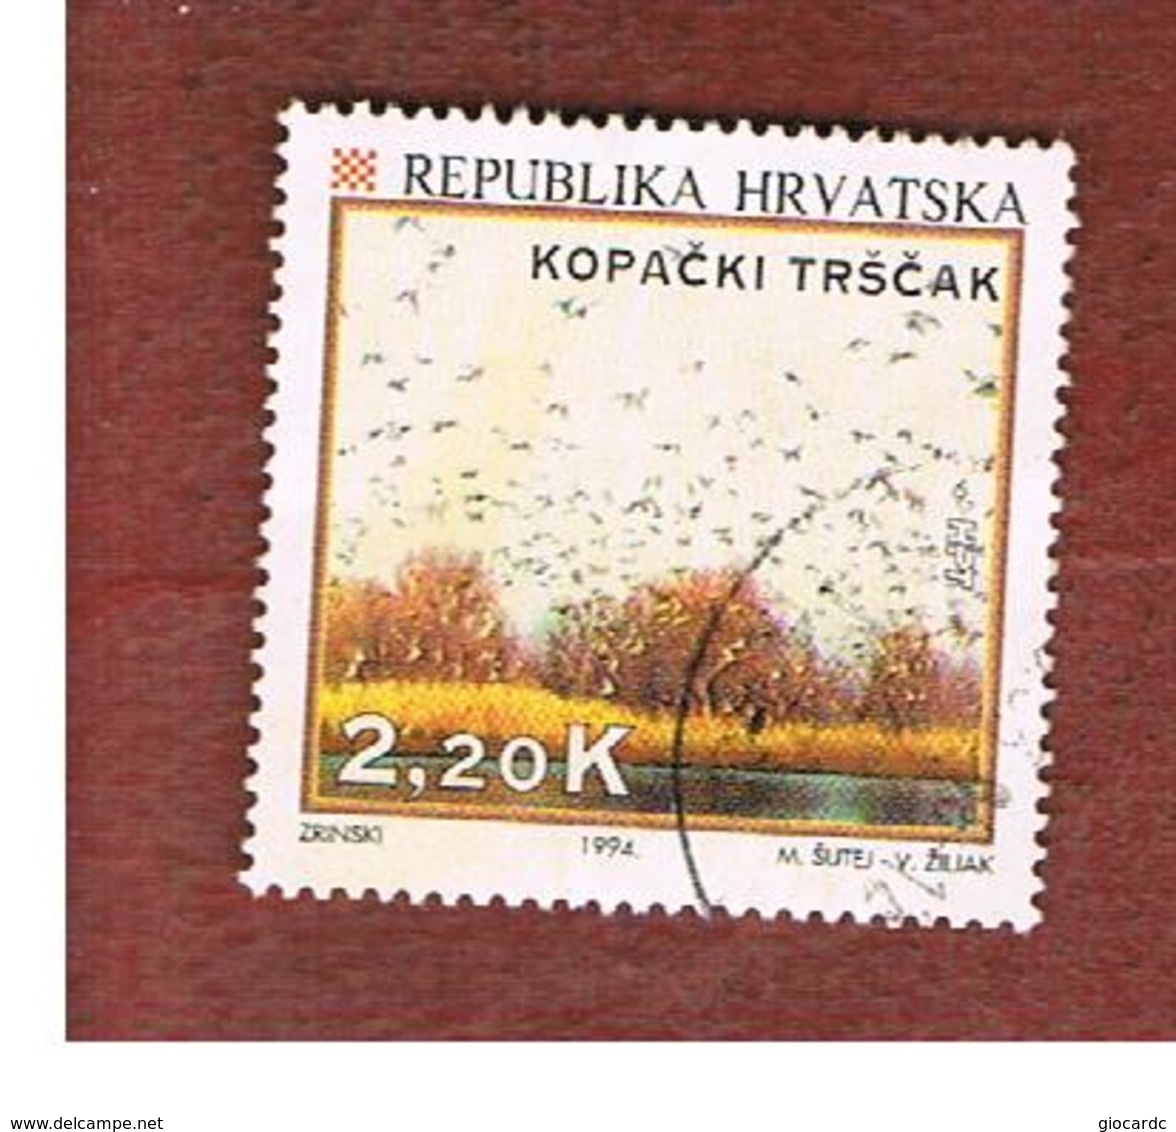 CROAZIA (CROATIA)  - SG 283  -  1994  TOURISM: KOPACKI, NATURAL RESERVE   -   USED - Croazia